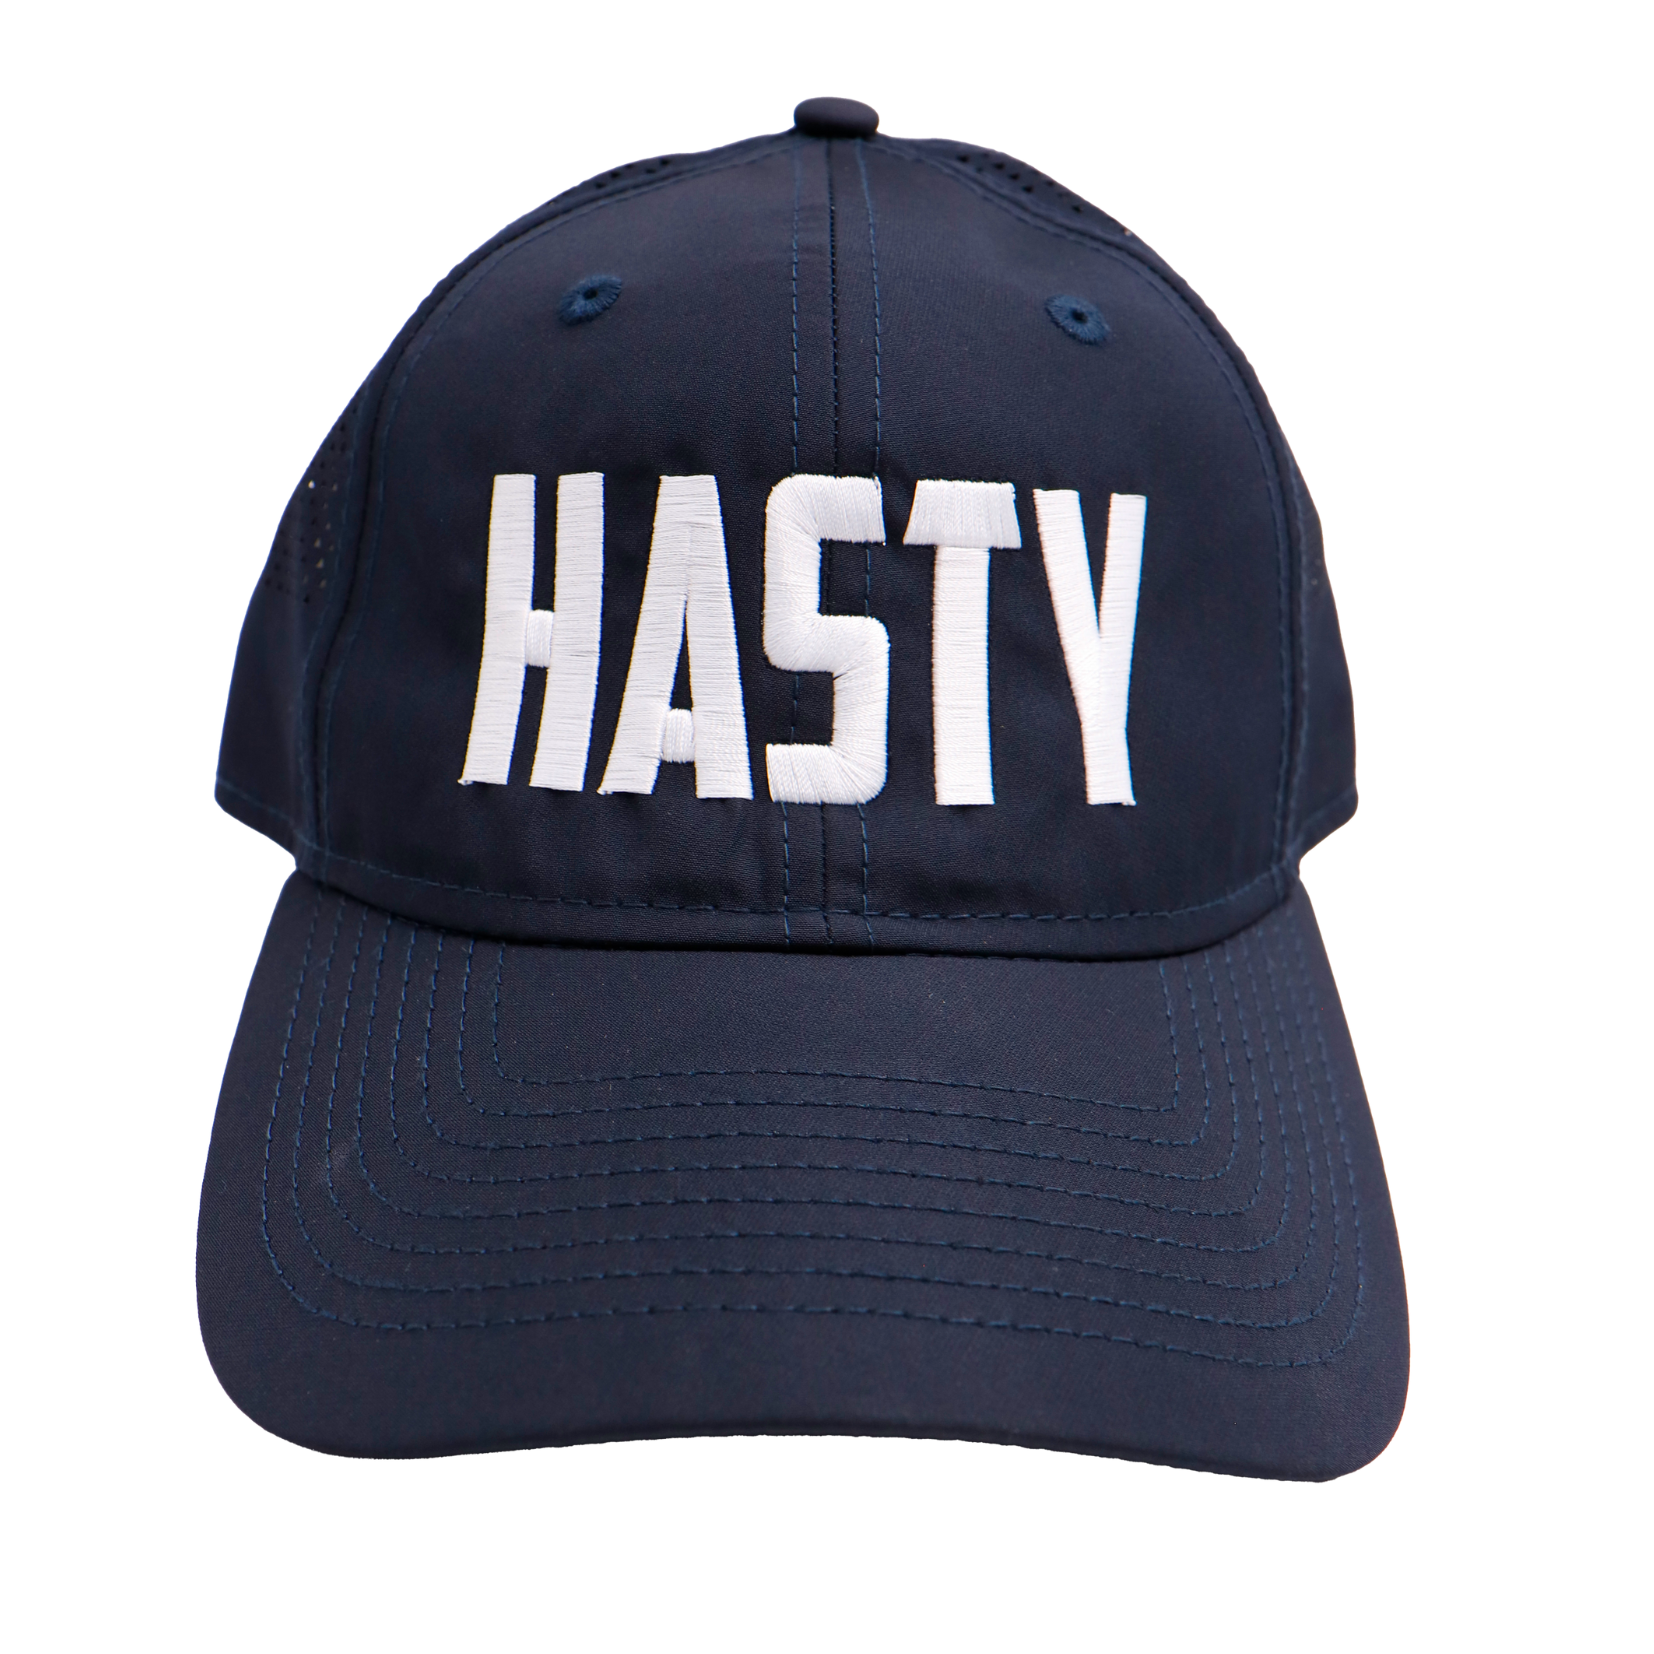 NEW** Hasty Bake "HASTY" New Era Hat Adult/Unisex - Navy